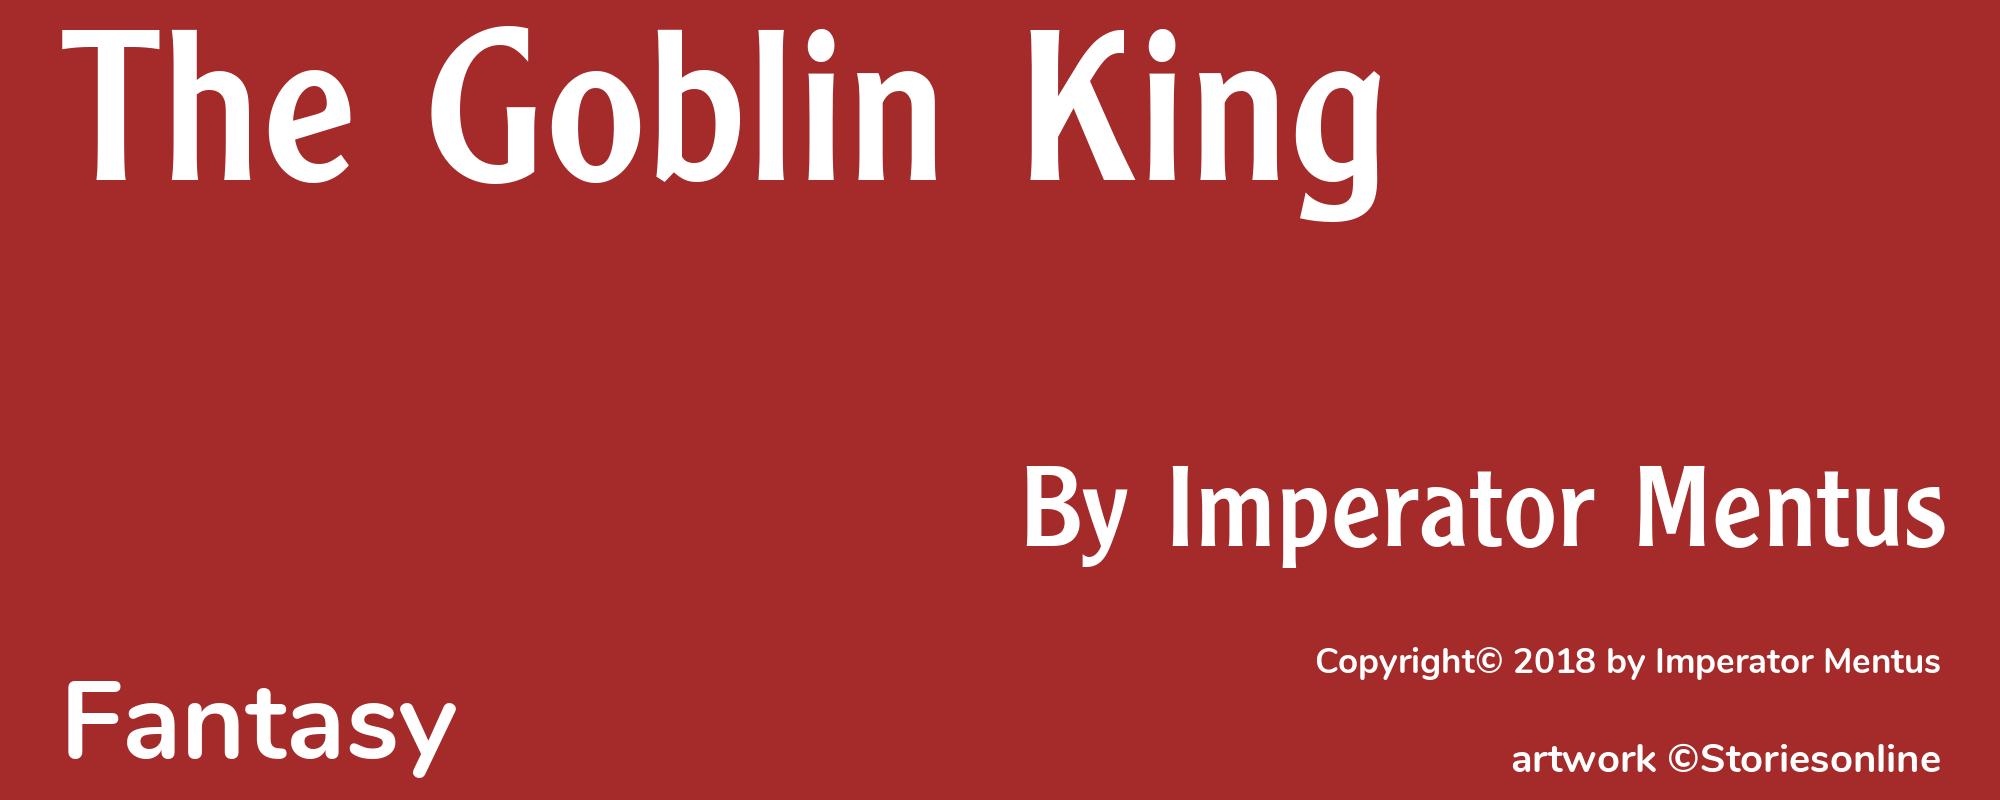 The Goblin King - Cover